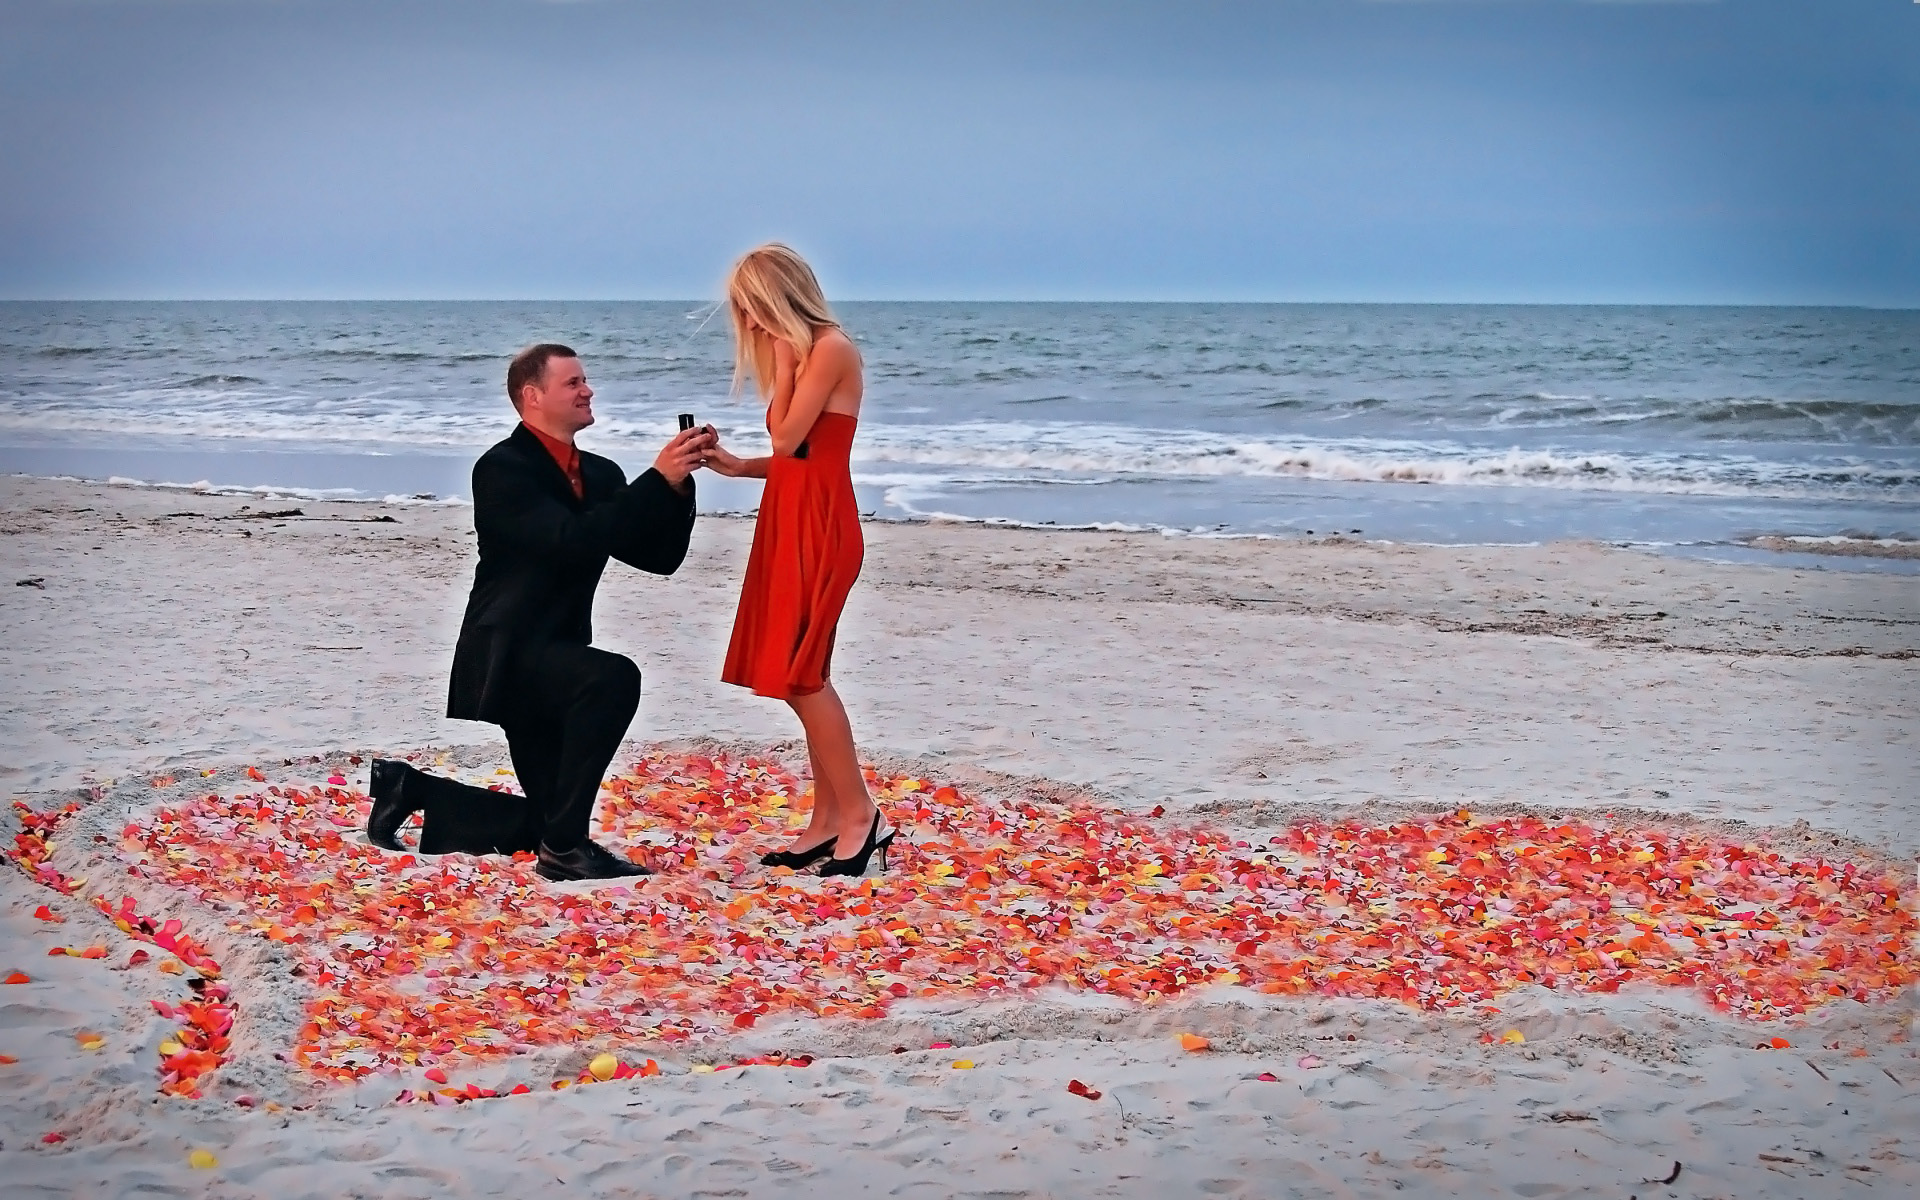 Romantic Proposal Image Hd - 1920x1200 ...